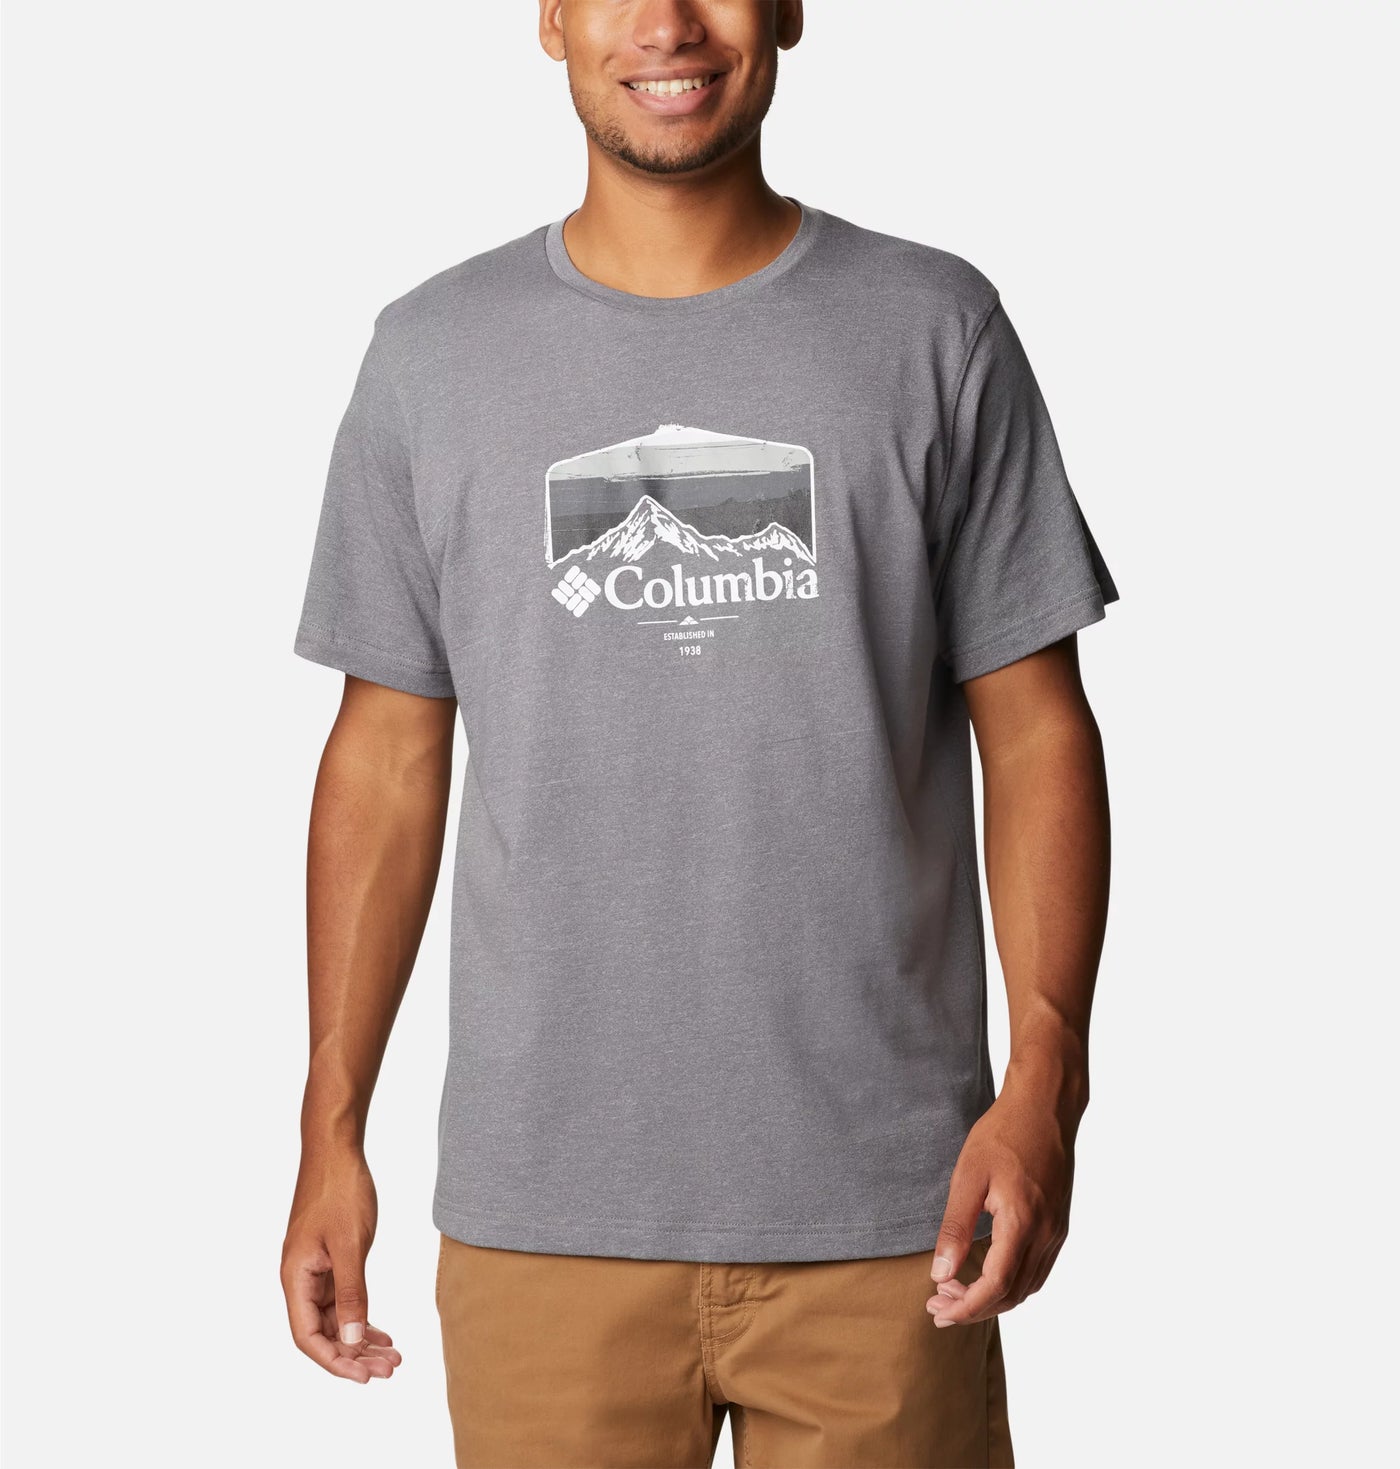 Thistletown Hills T-shirt